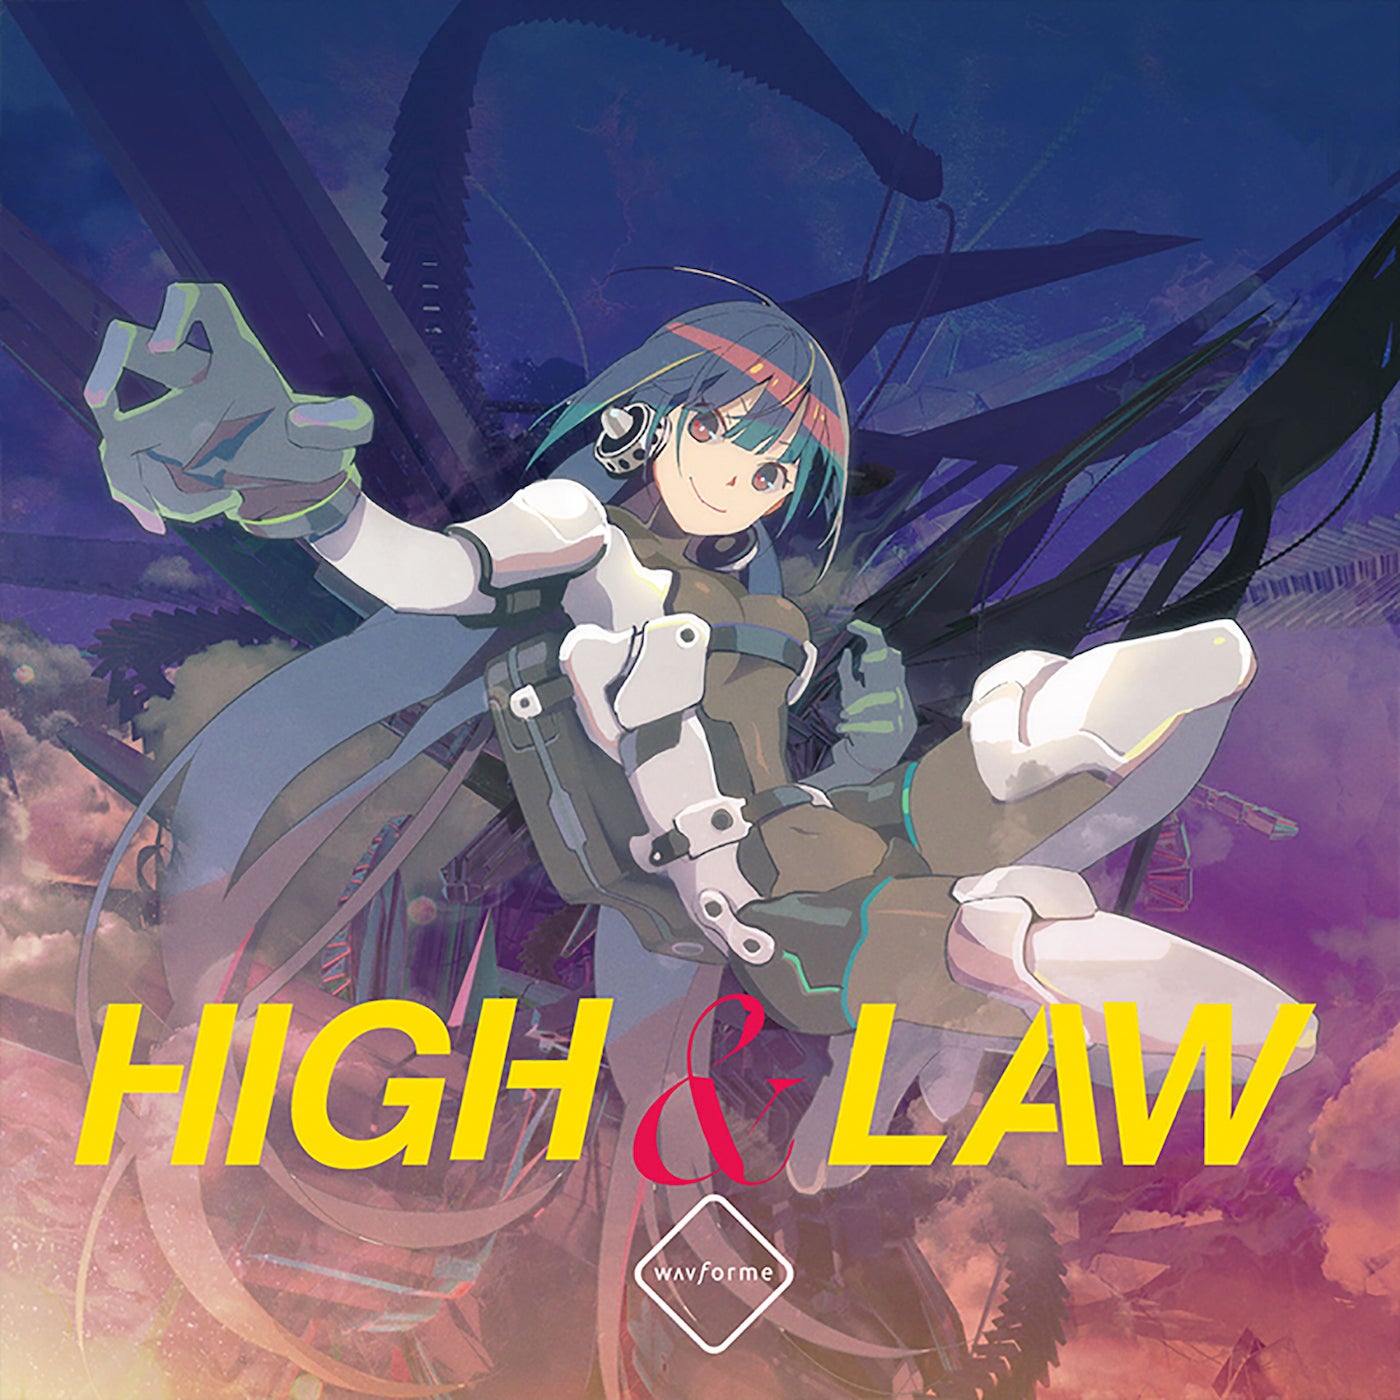 High and law. Usao.